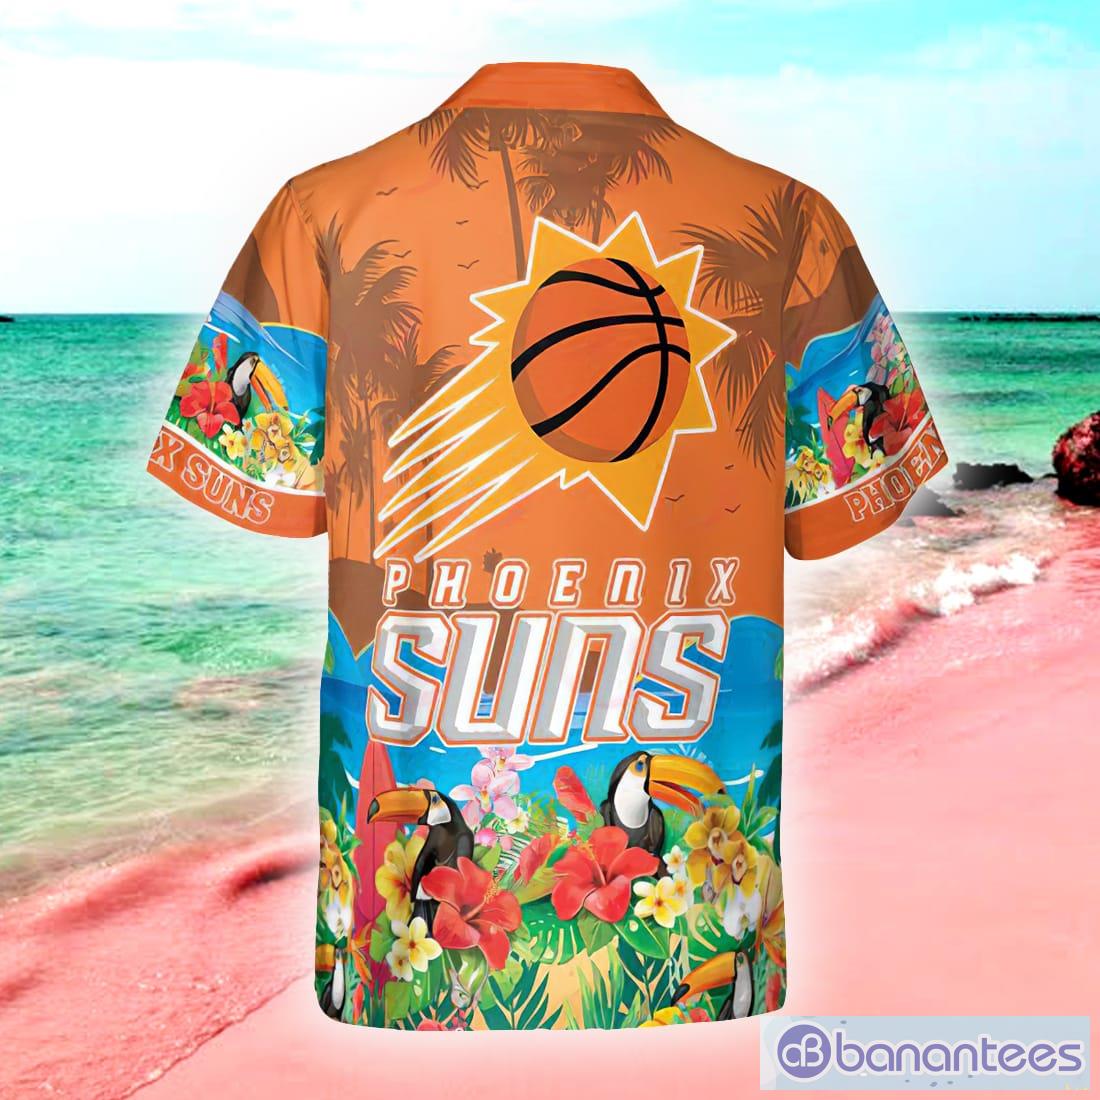 Miami Heat NBA Playoffs Design 9 Beach Hawaiian Shirt Men And Women For  Fans Gift - Banantees